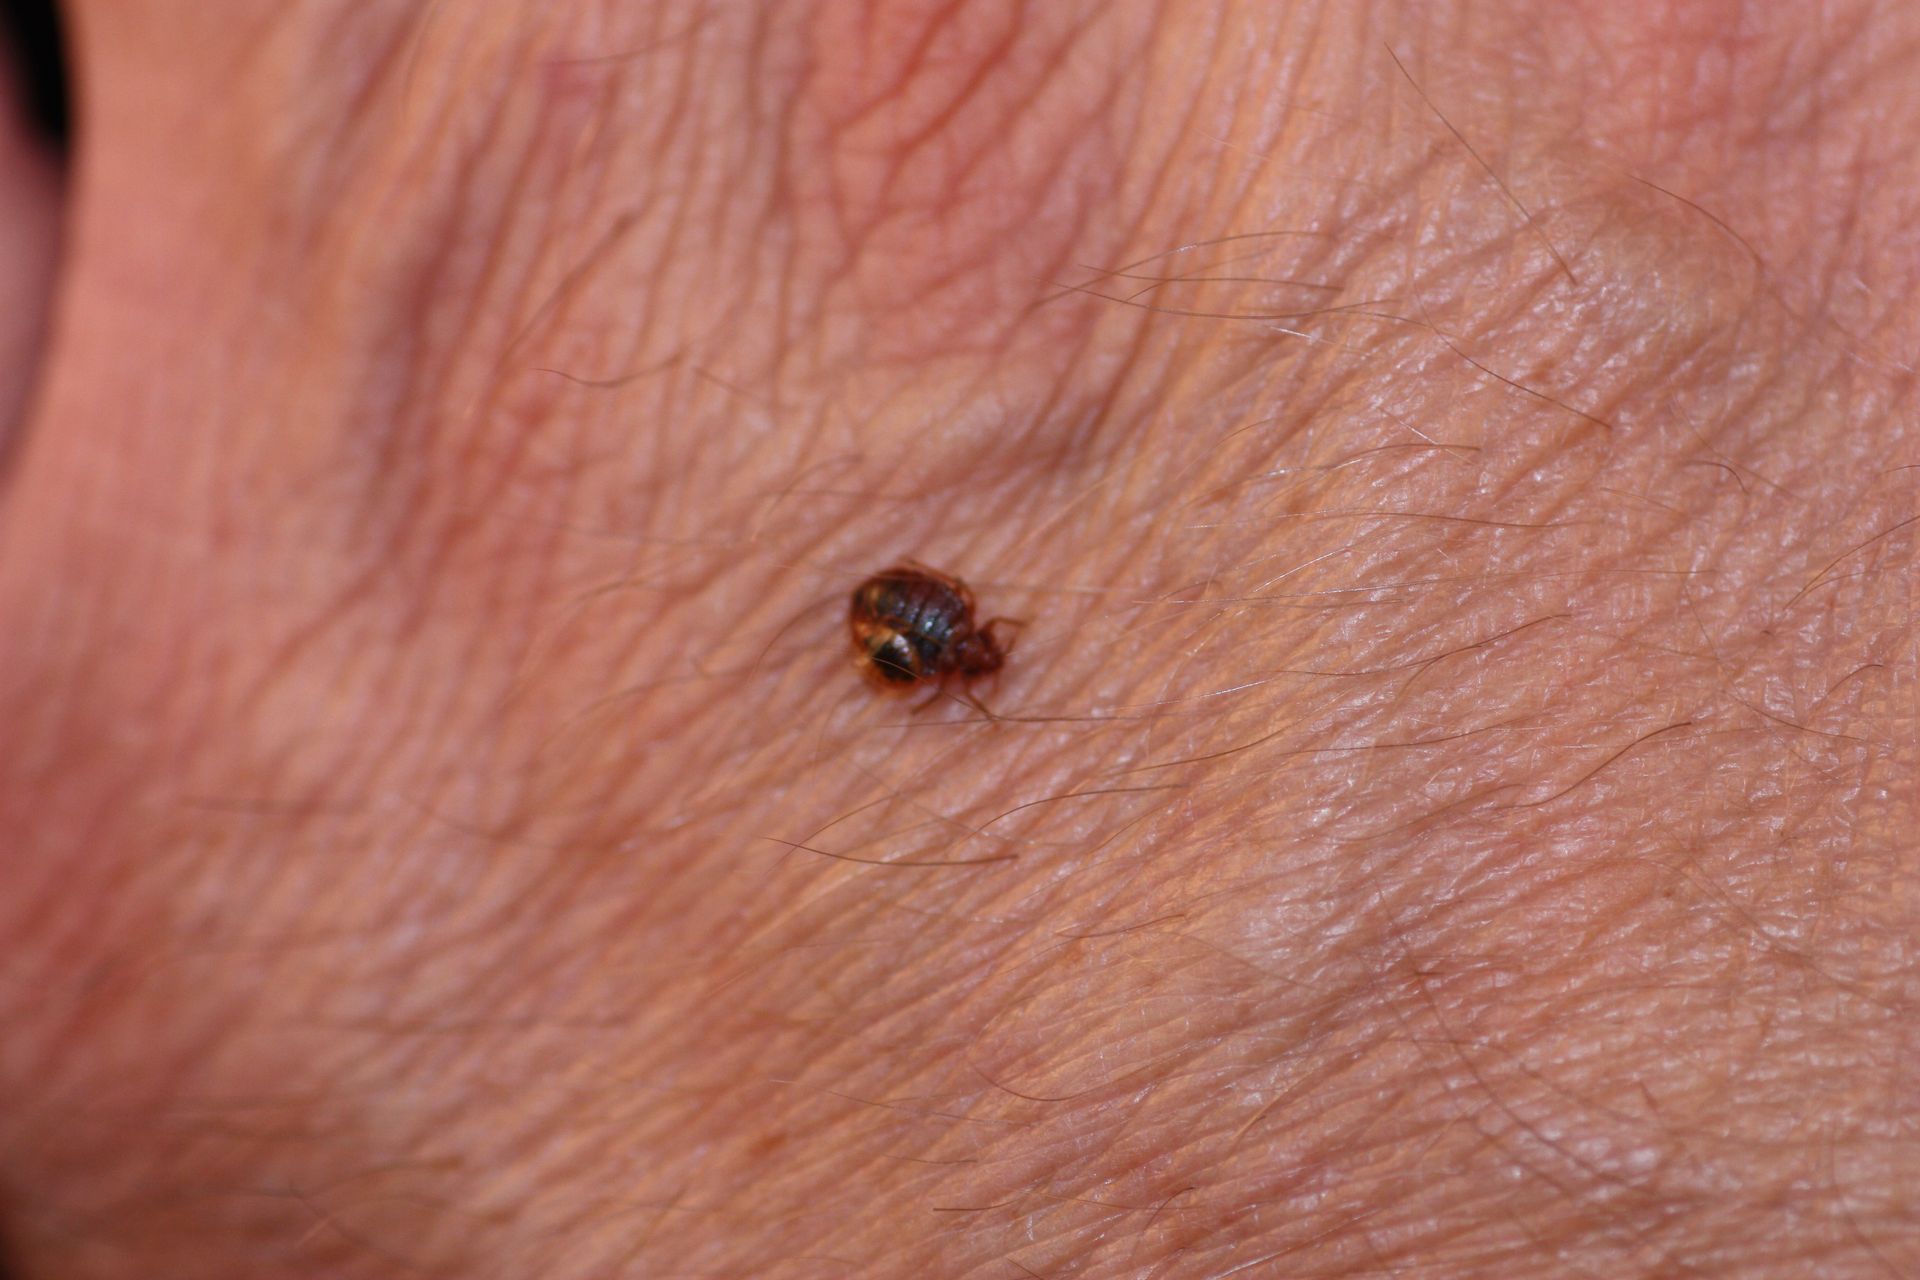 tiny bed bug crawling on skin